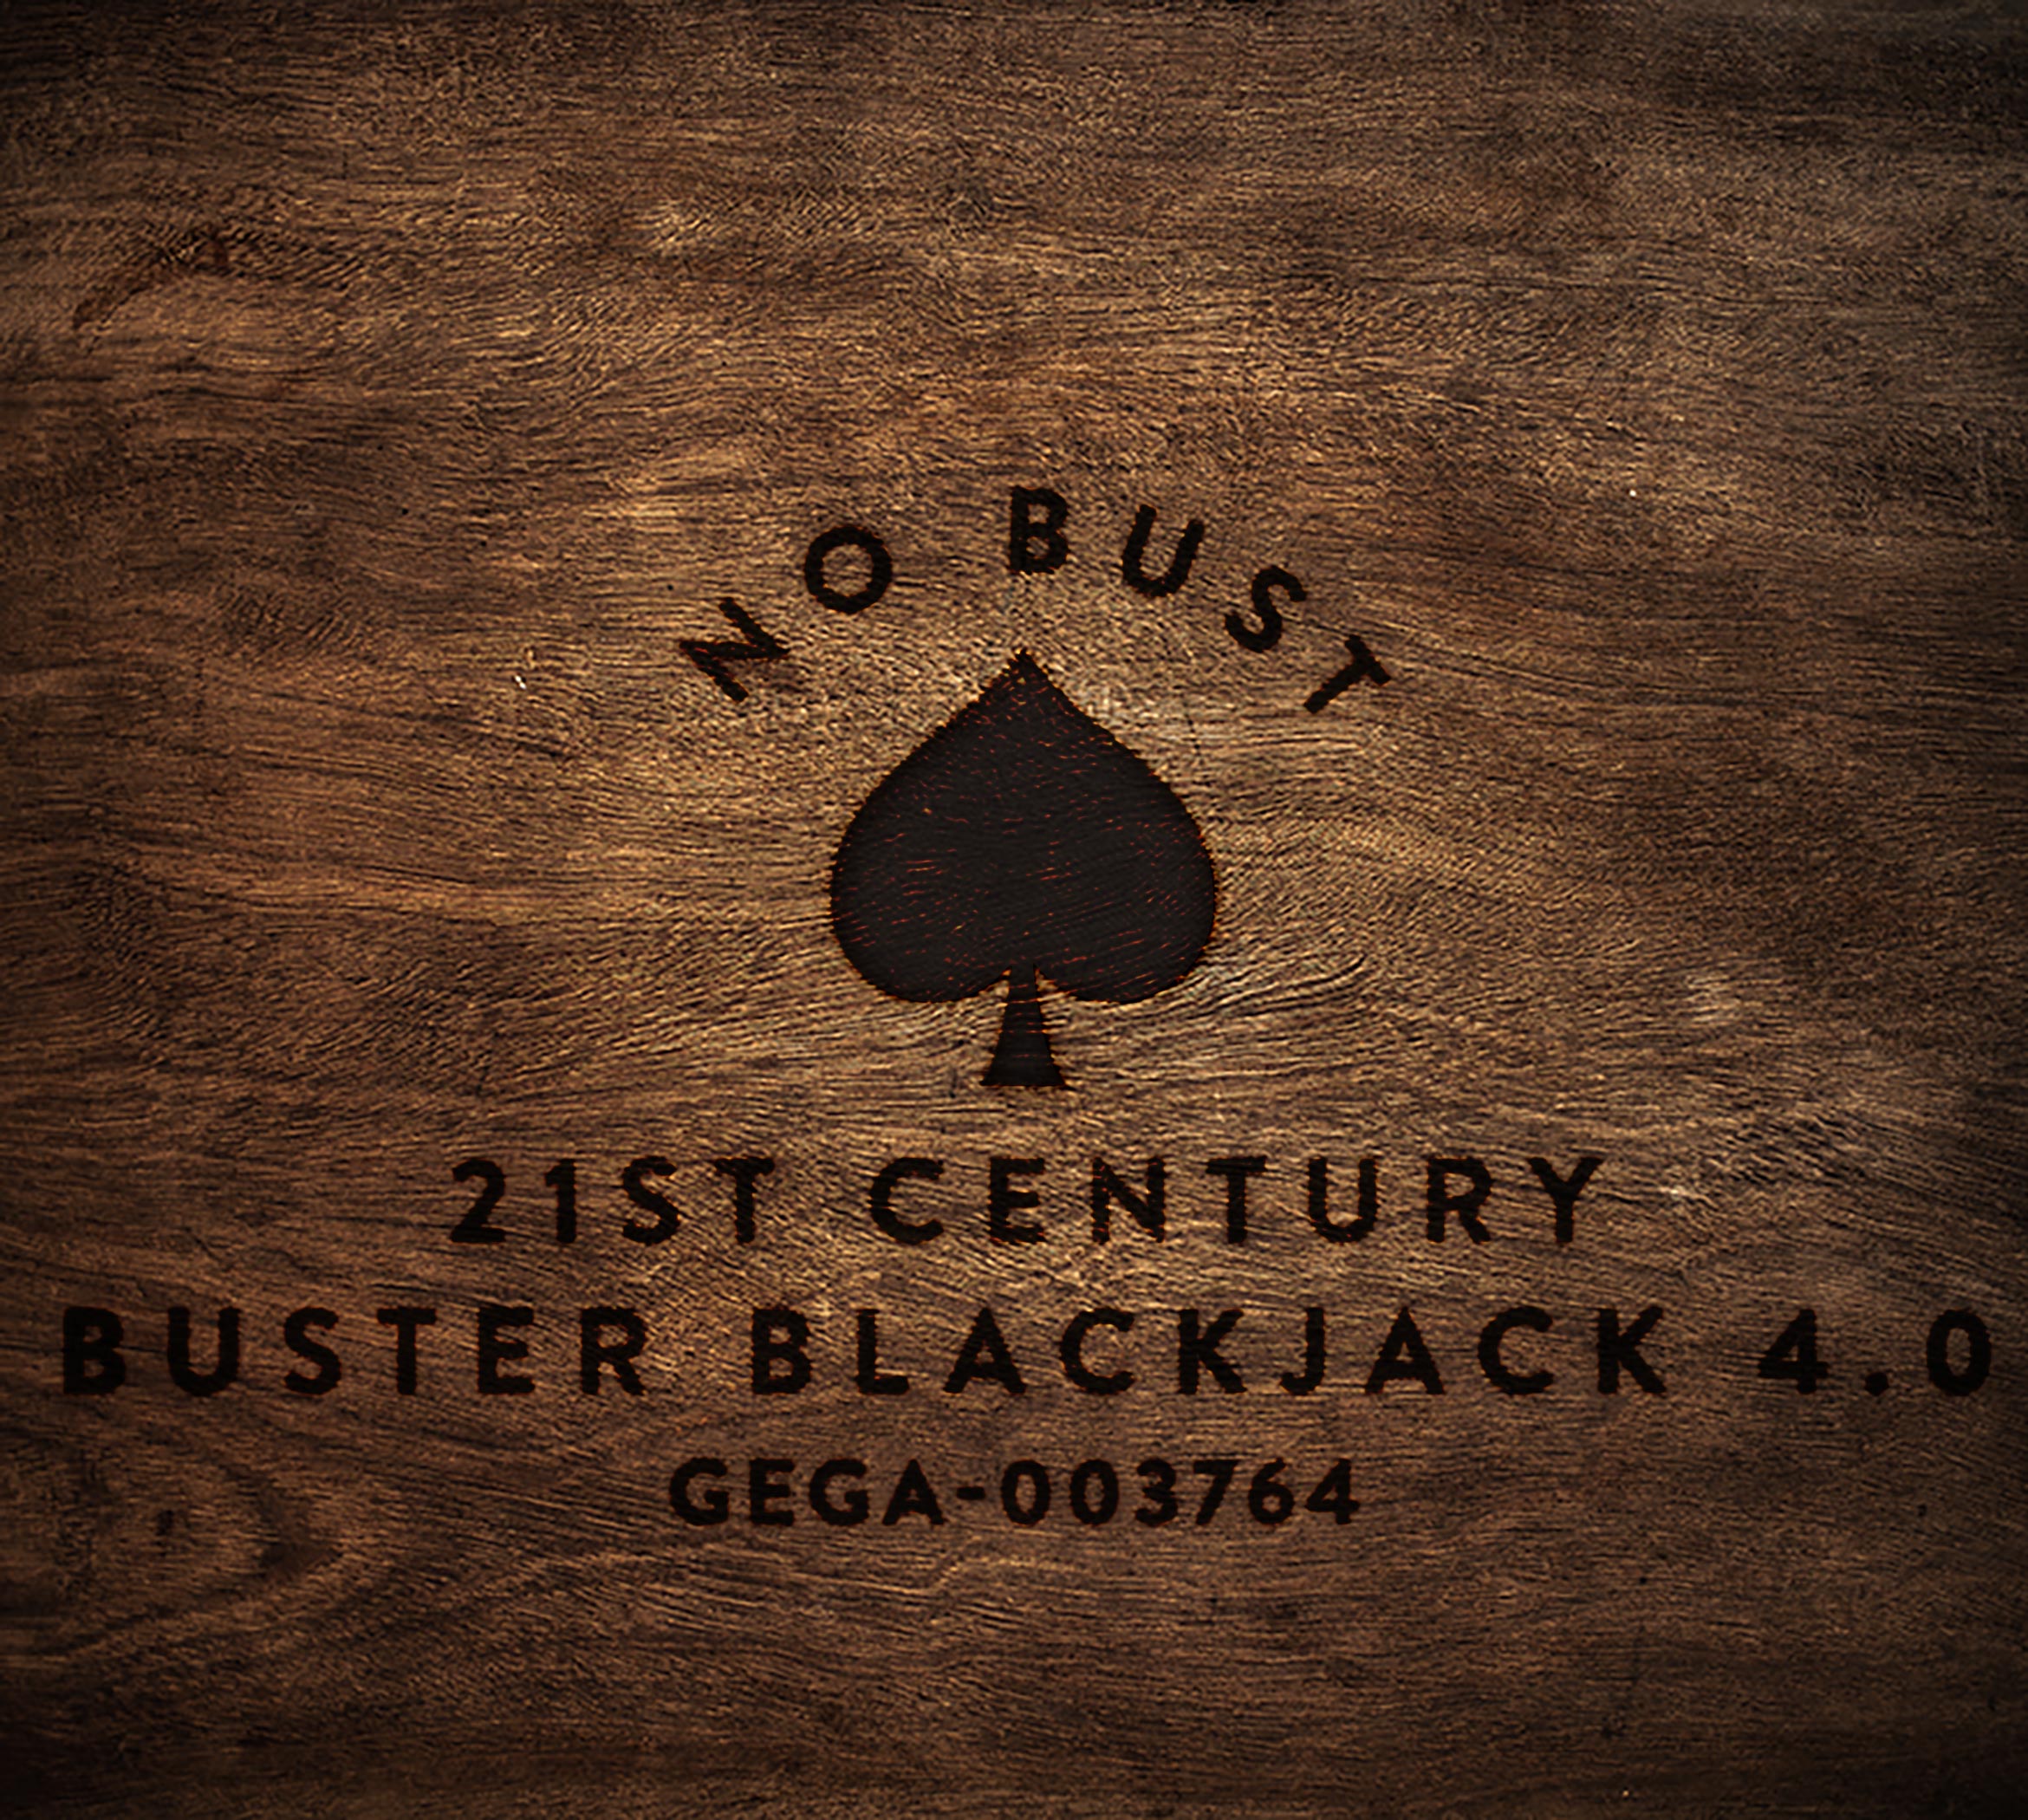 No Bust 21st Century Buster Blackjack 4.0 GEGA-003764 wood block